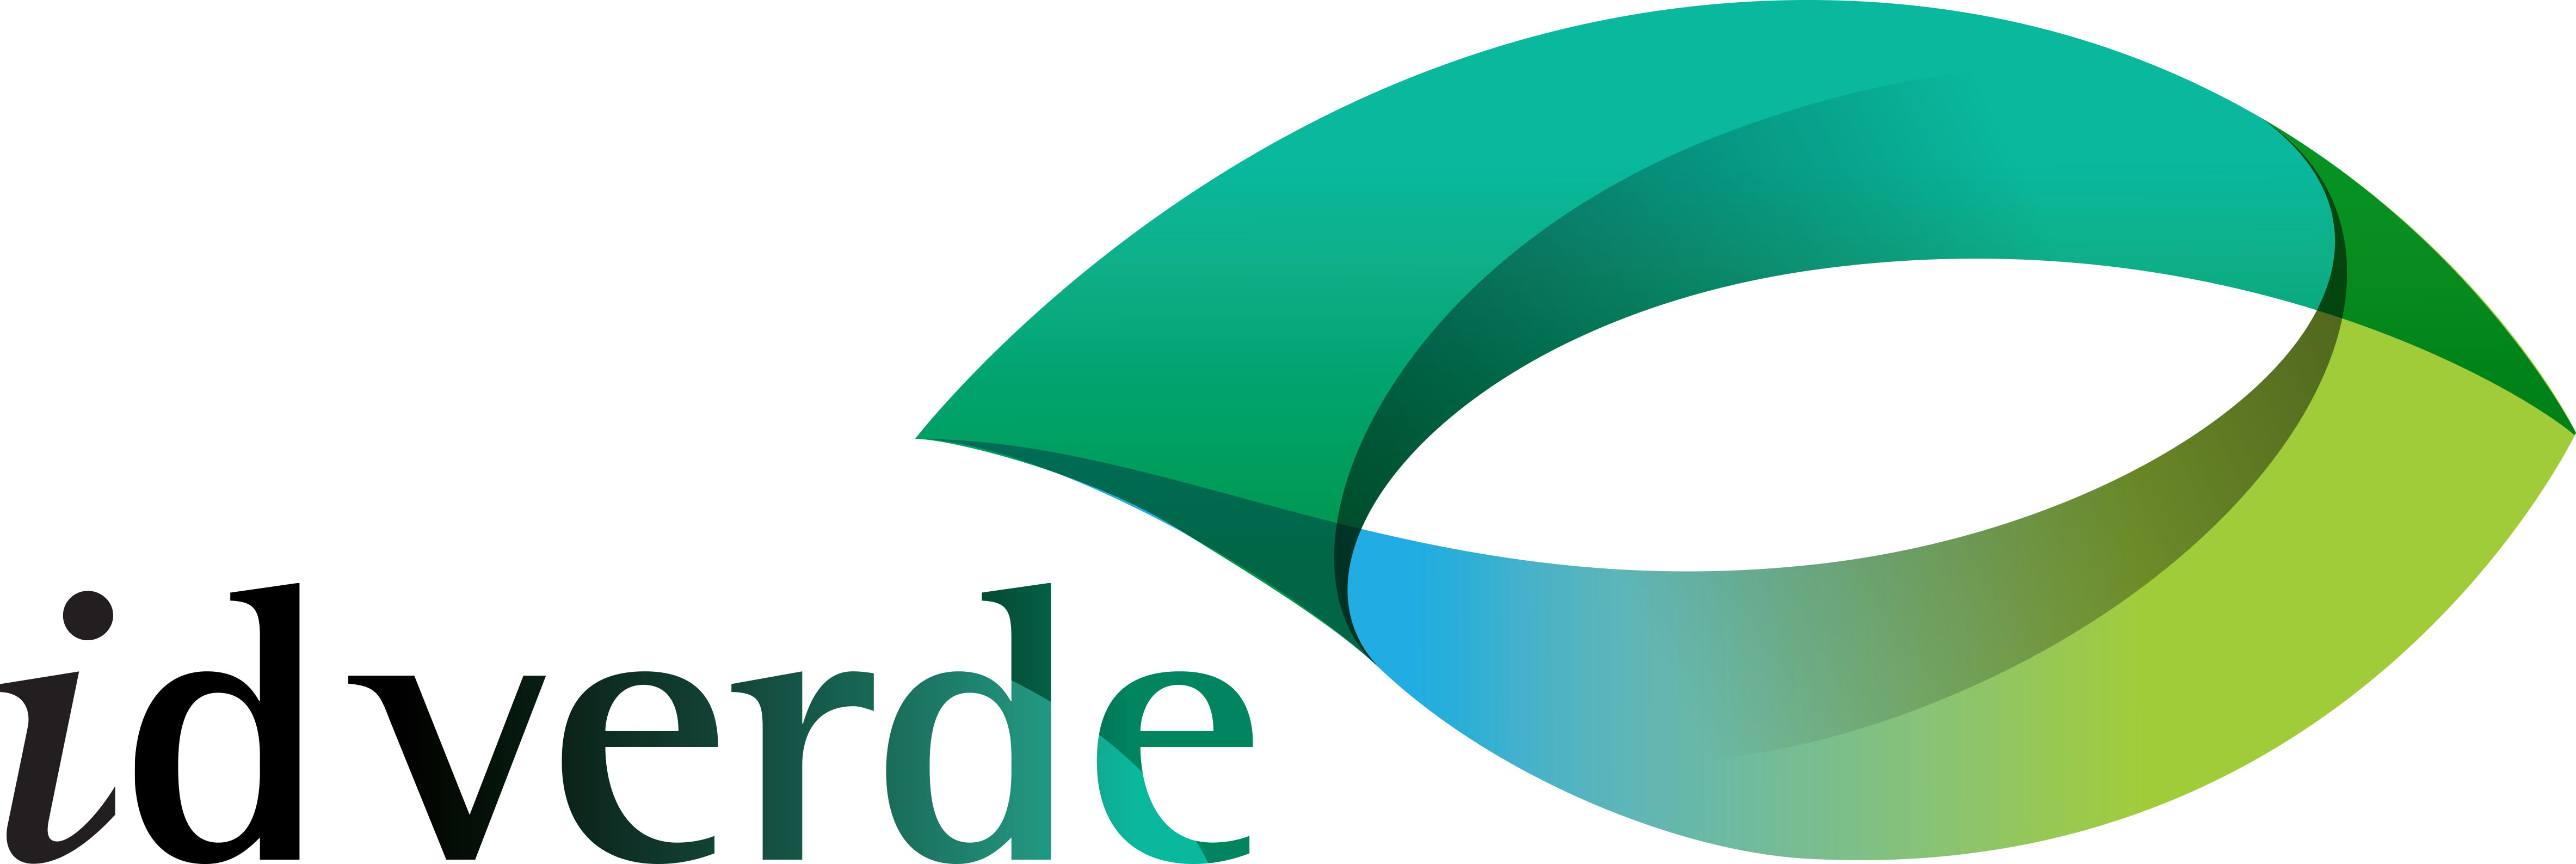 Logo Id verde